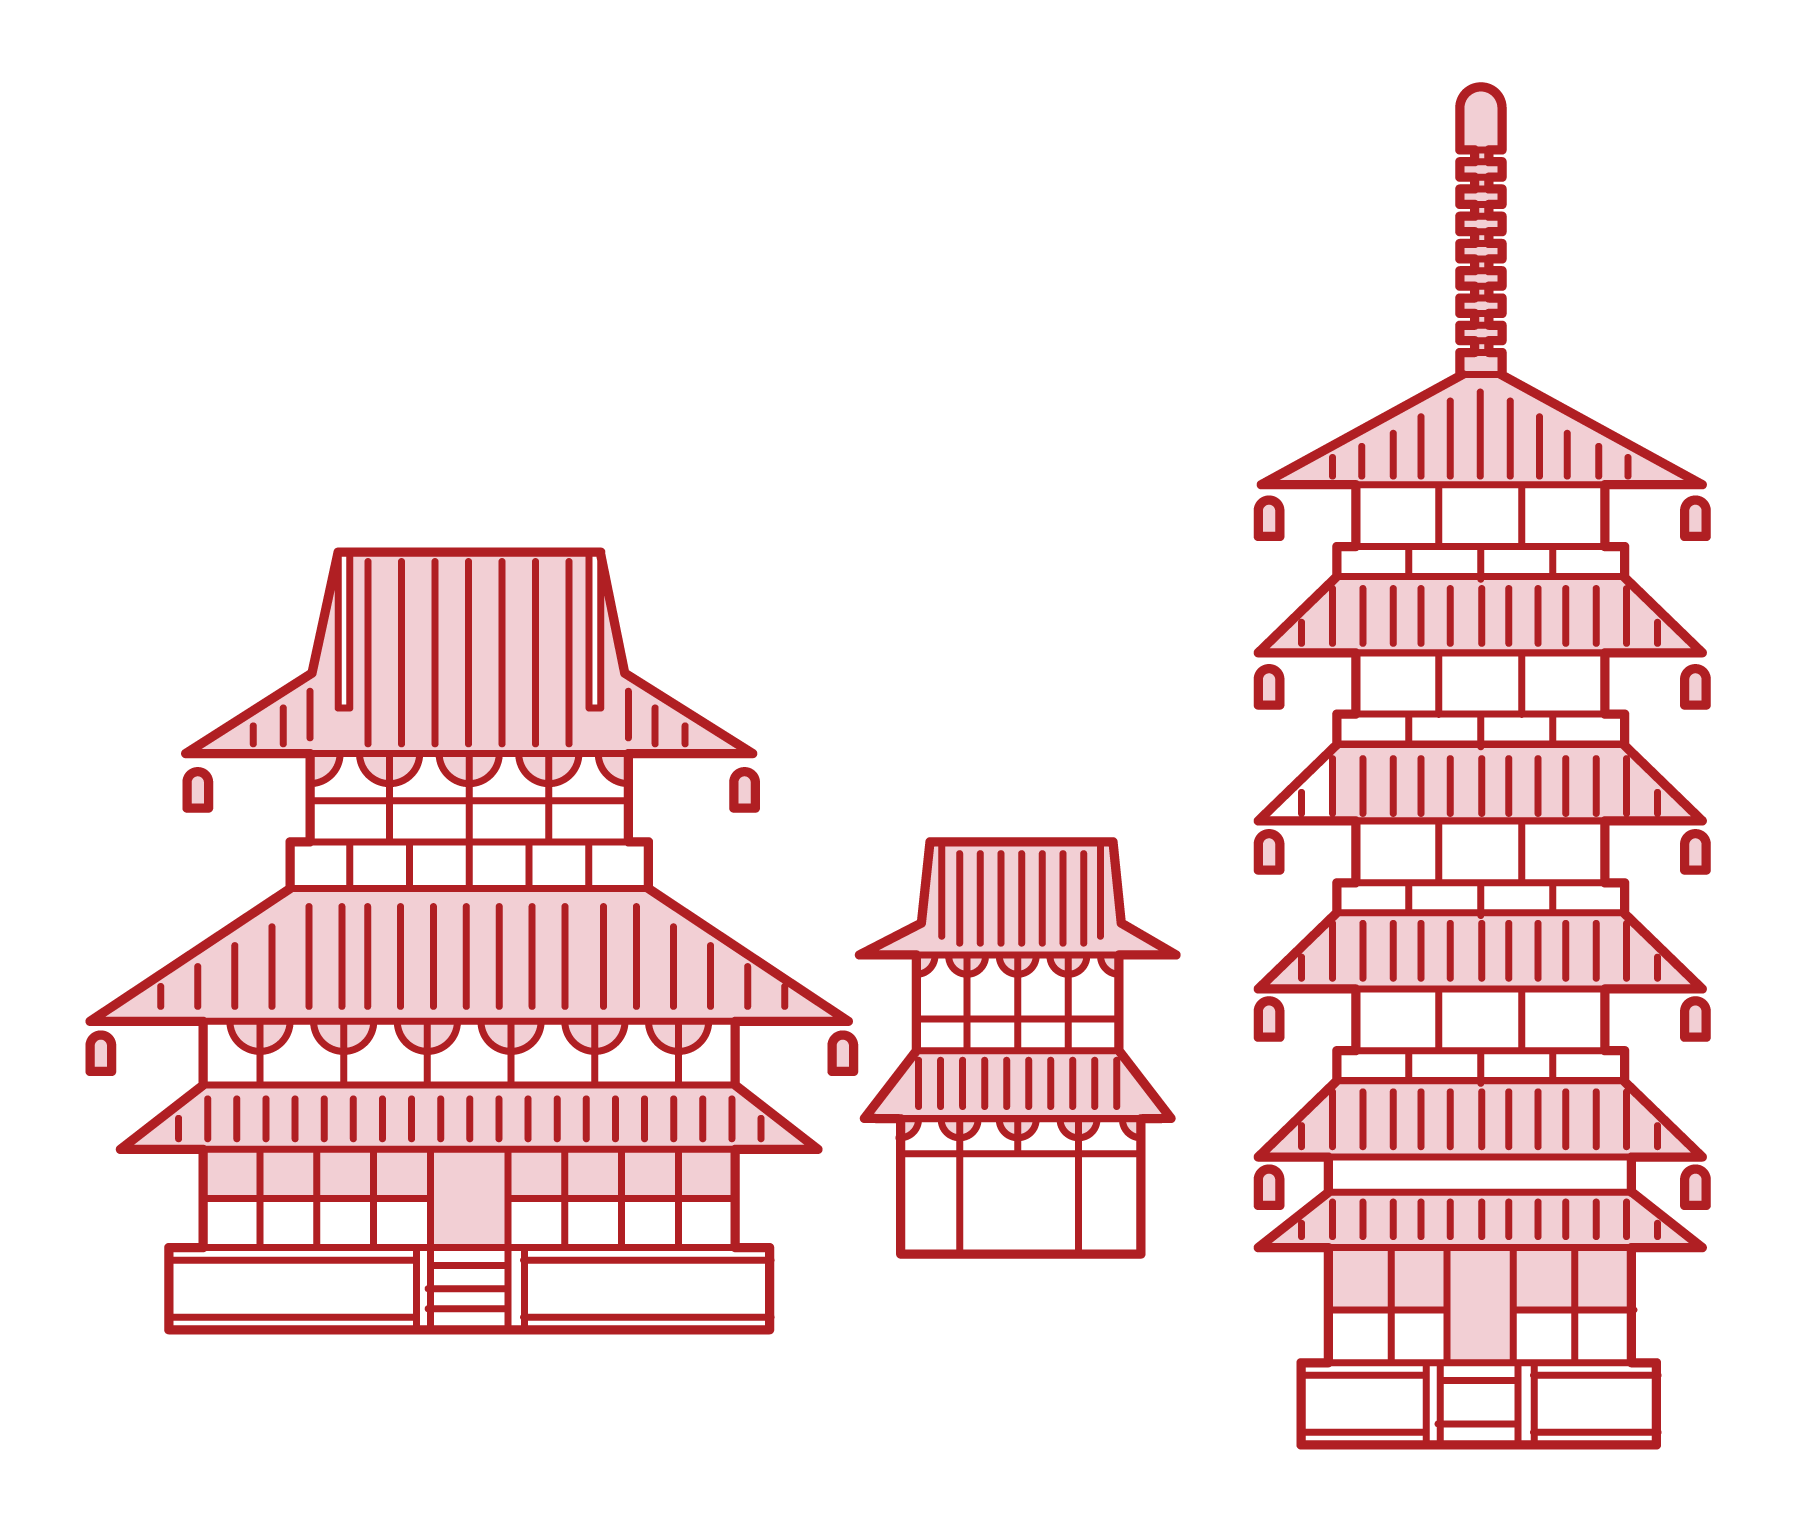 Illustration of Horyuji Temple